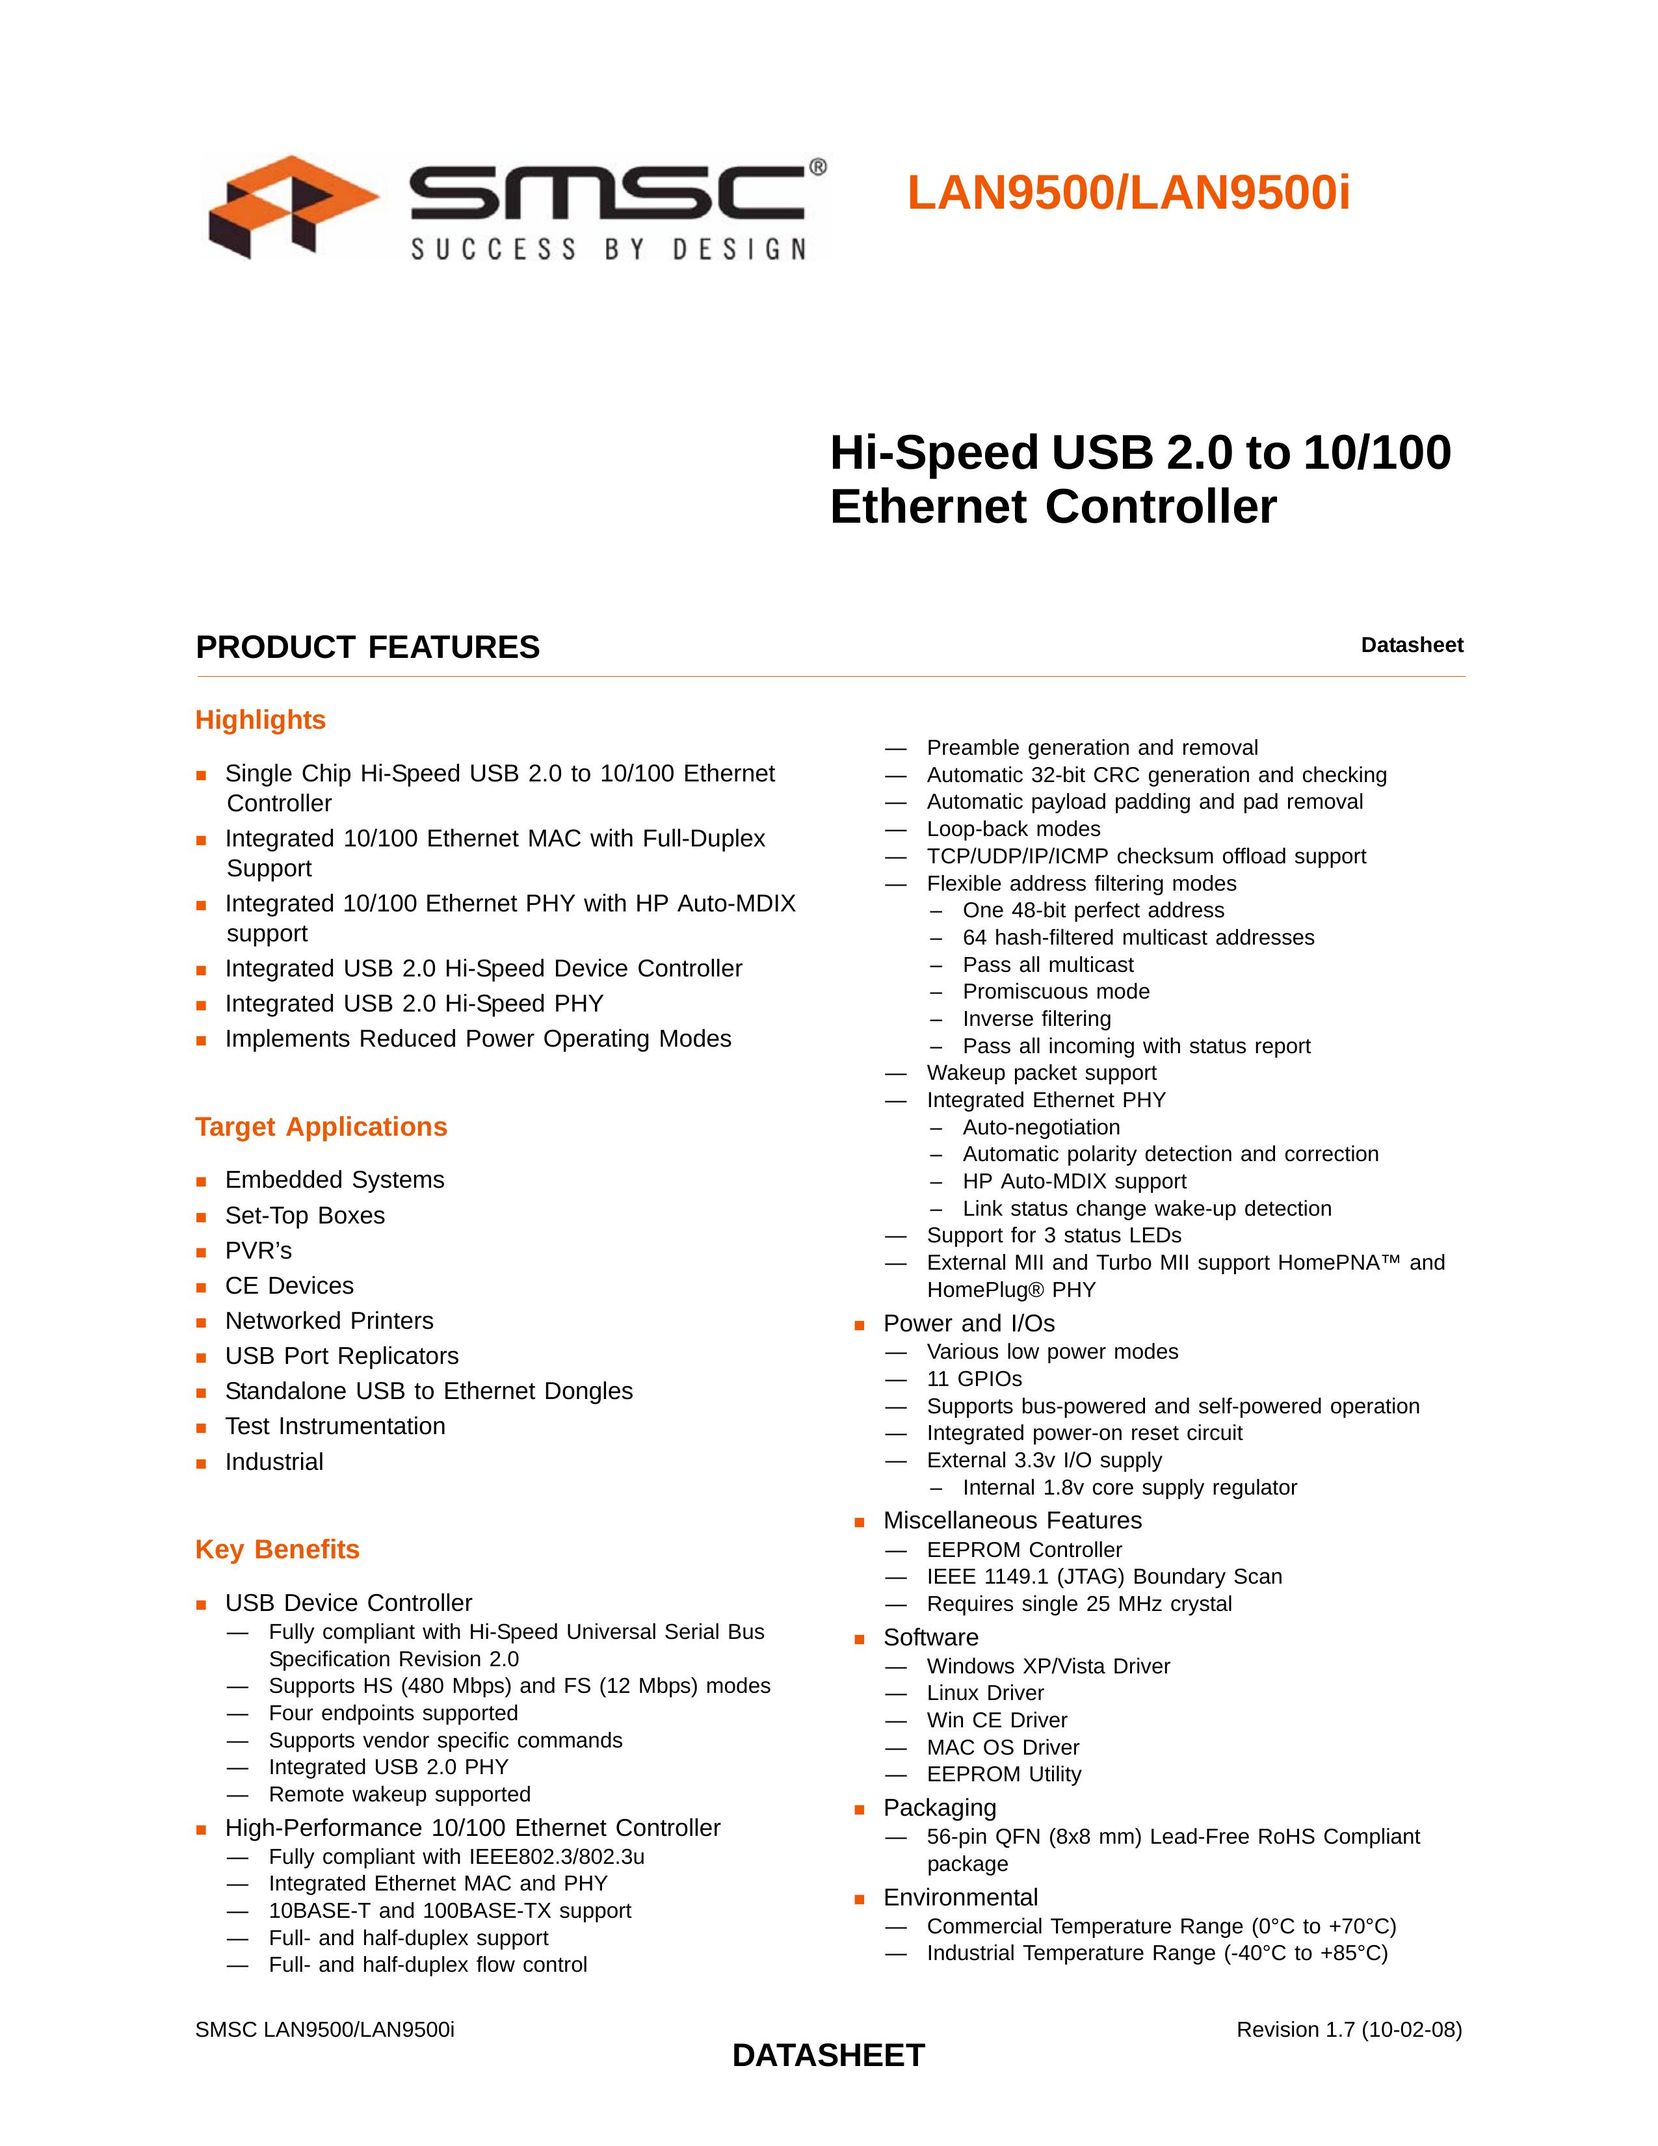 SMSC LAN9500i Network Card User Manual